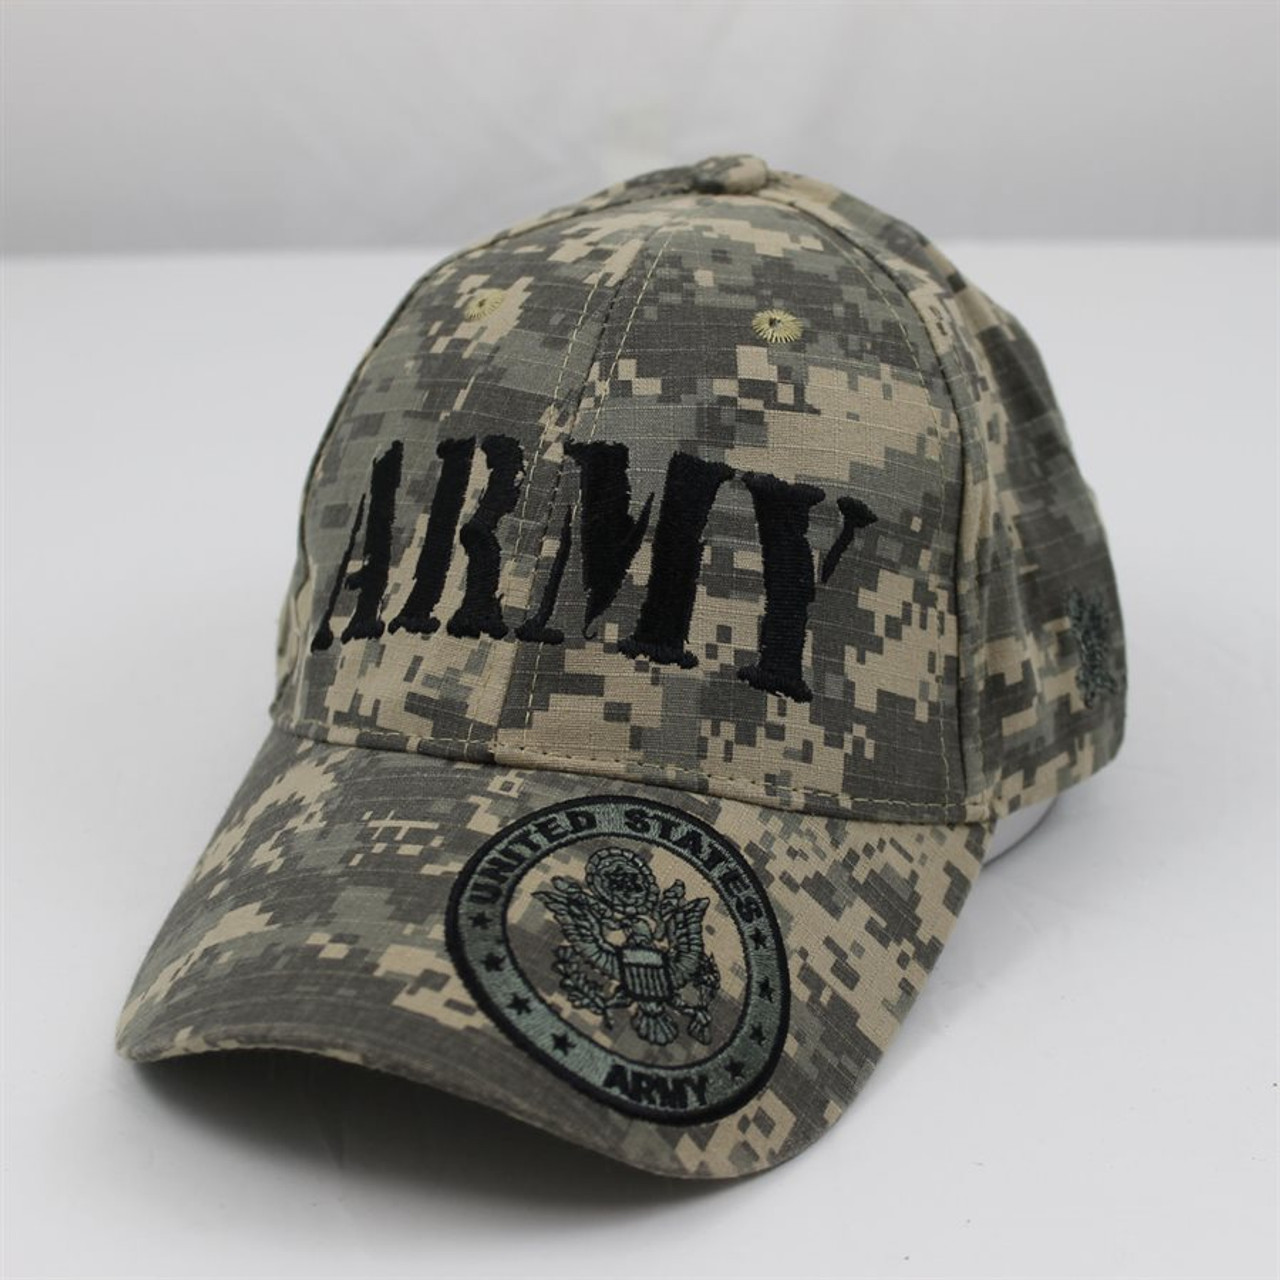 5849 - U.S. Army Cap - Cotton - ACU Digital Camouflage